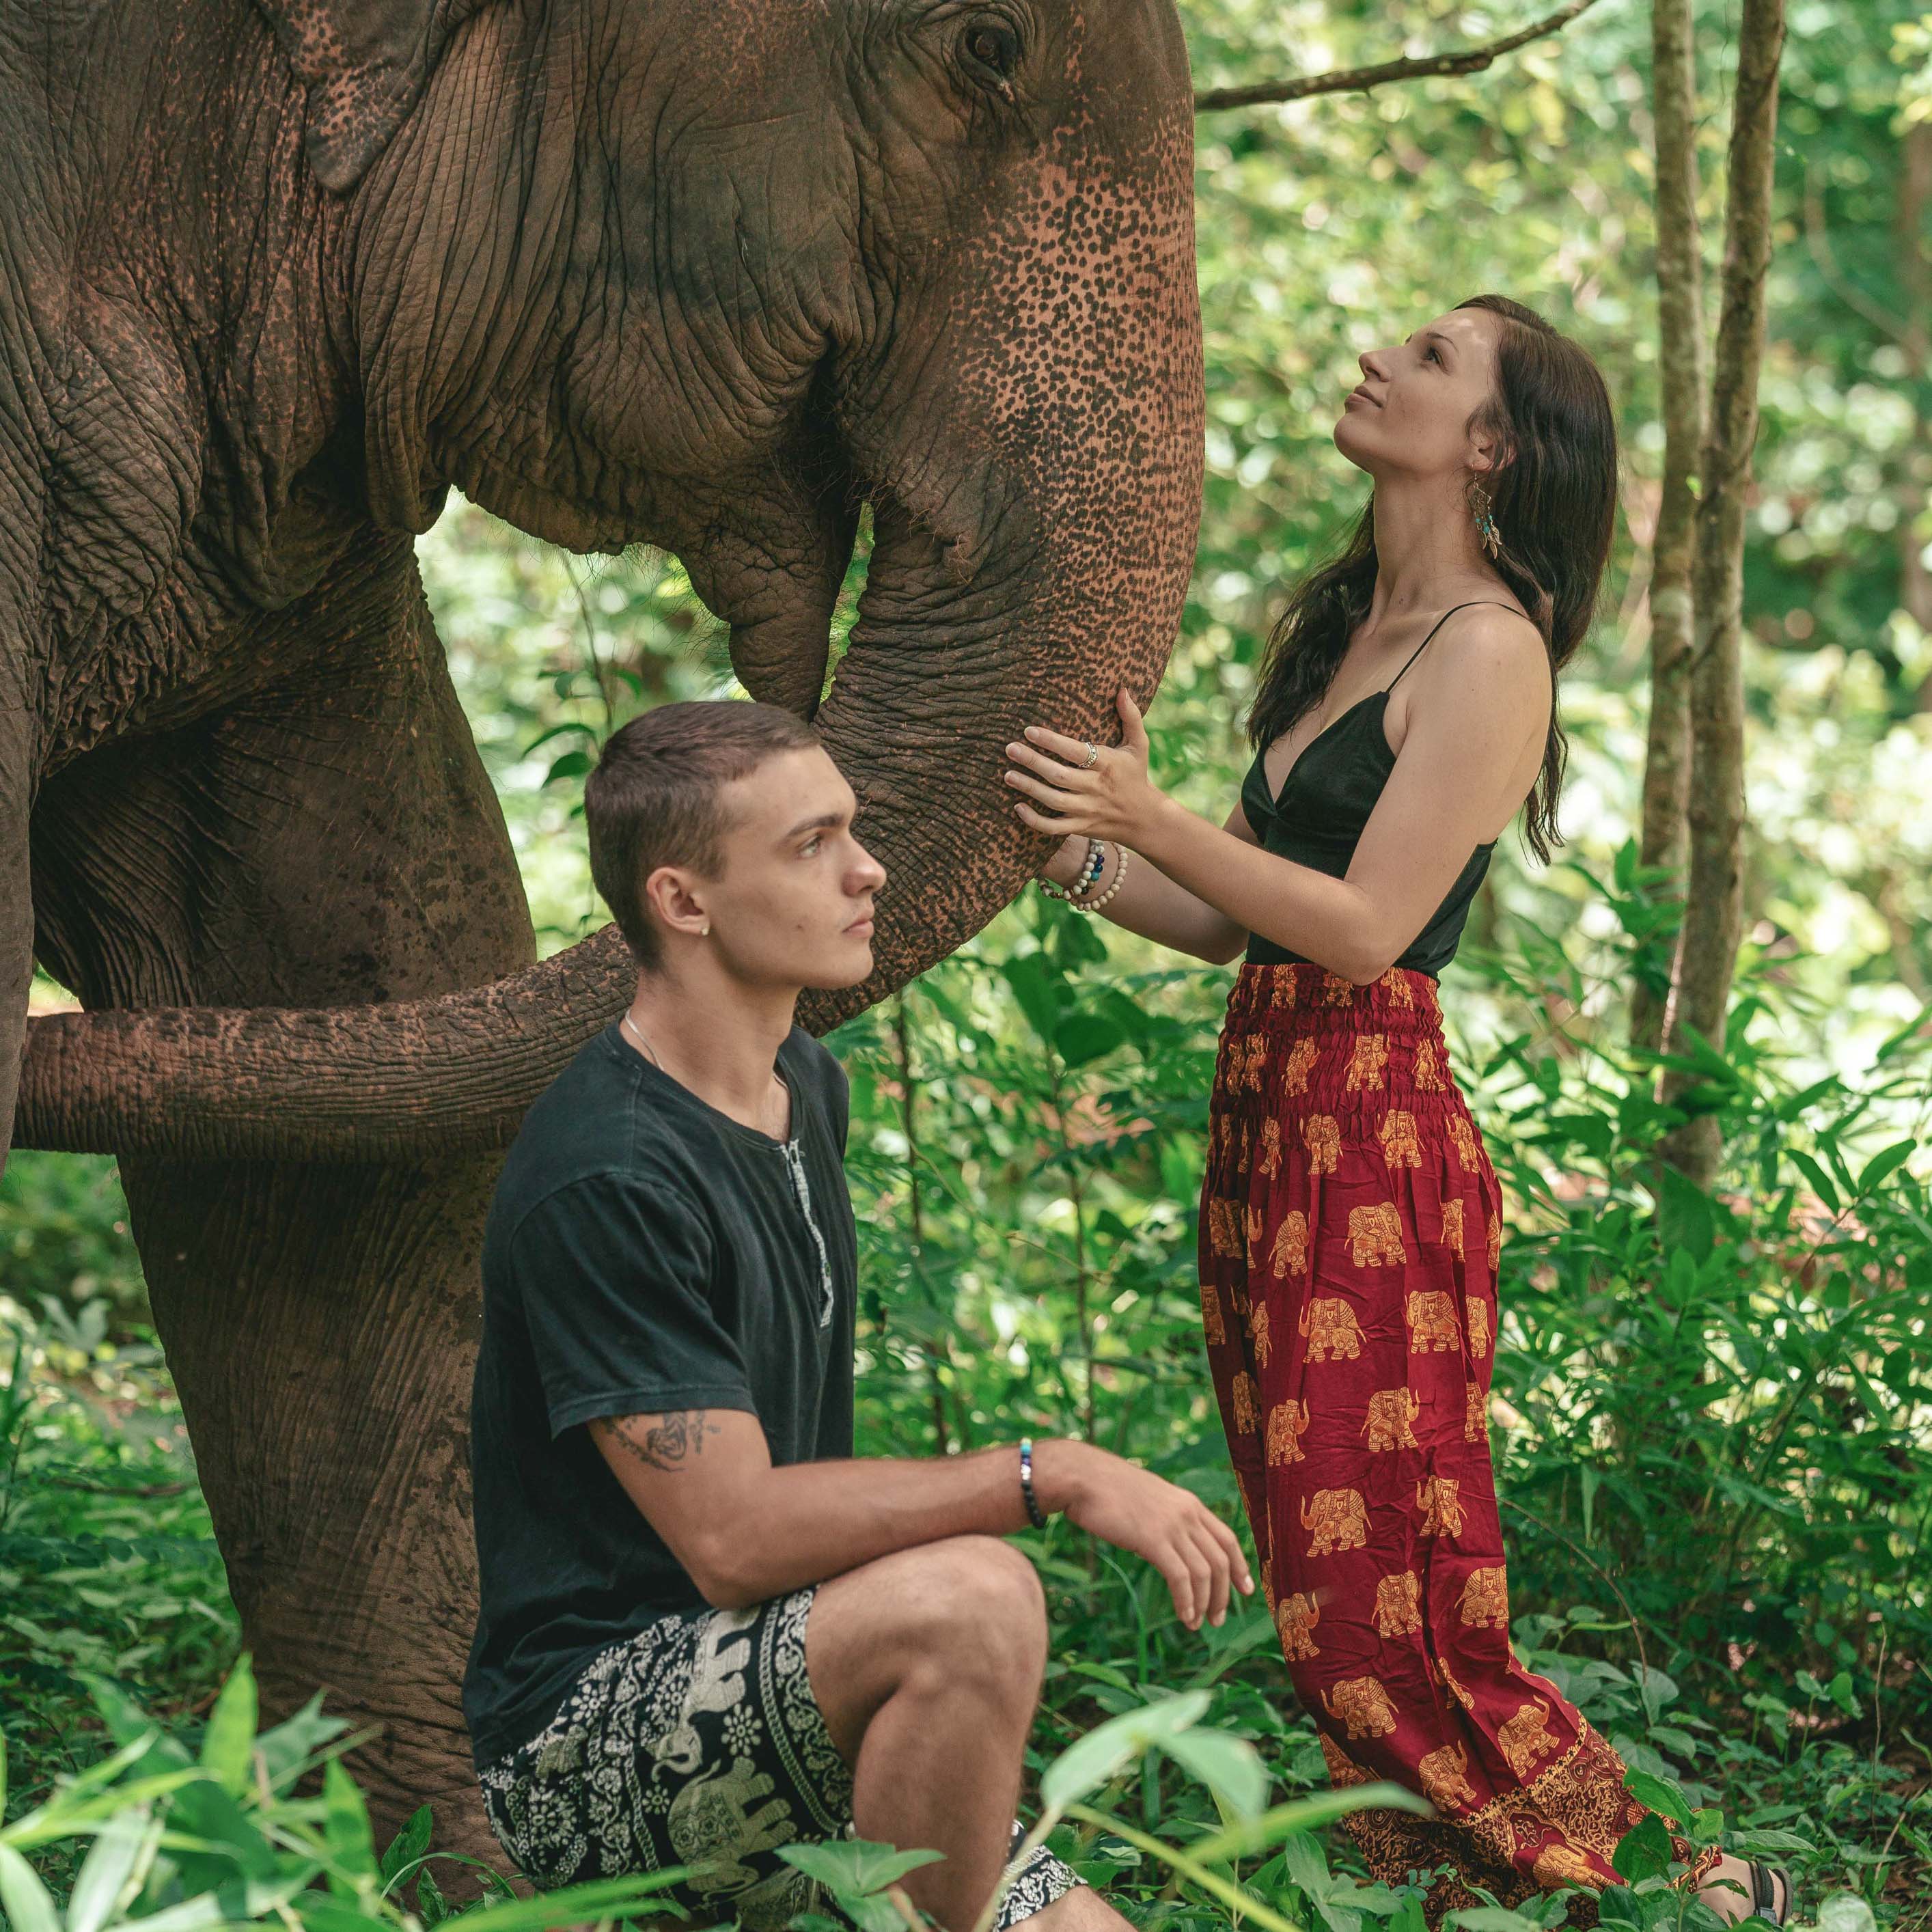 Savanna Pants Elepanta Women's Pants - Buy Today Elephant Pants Jewelry And Bohemian Clothes Handmade In Thailand Help To Save The Elephants FairTrade And Vegan